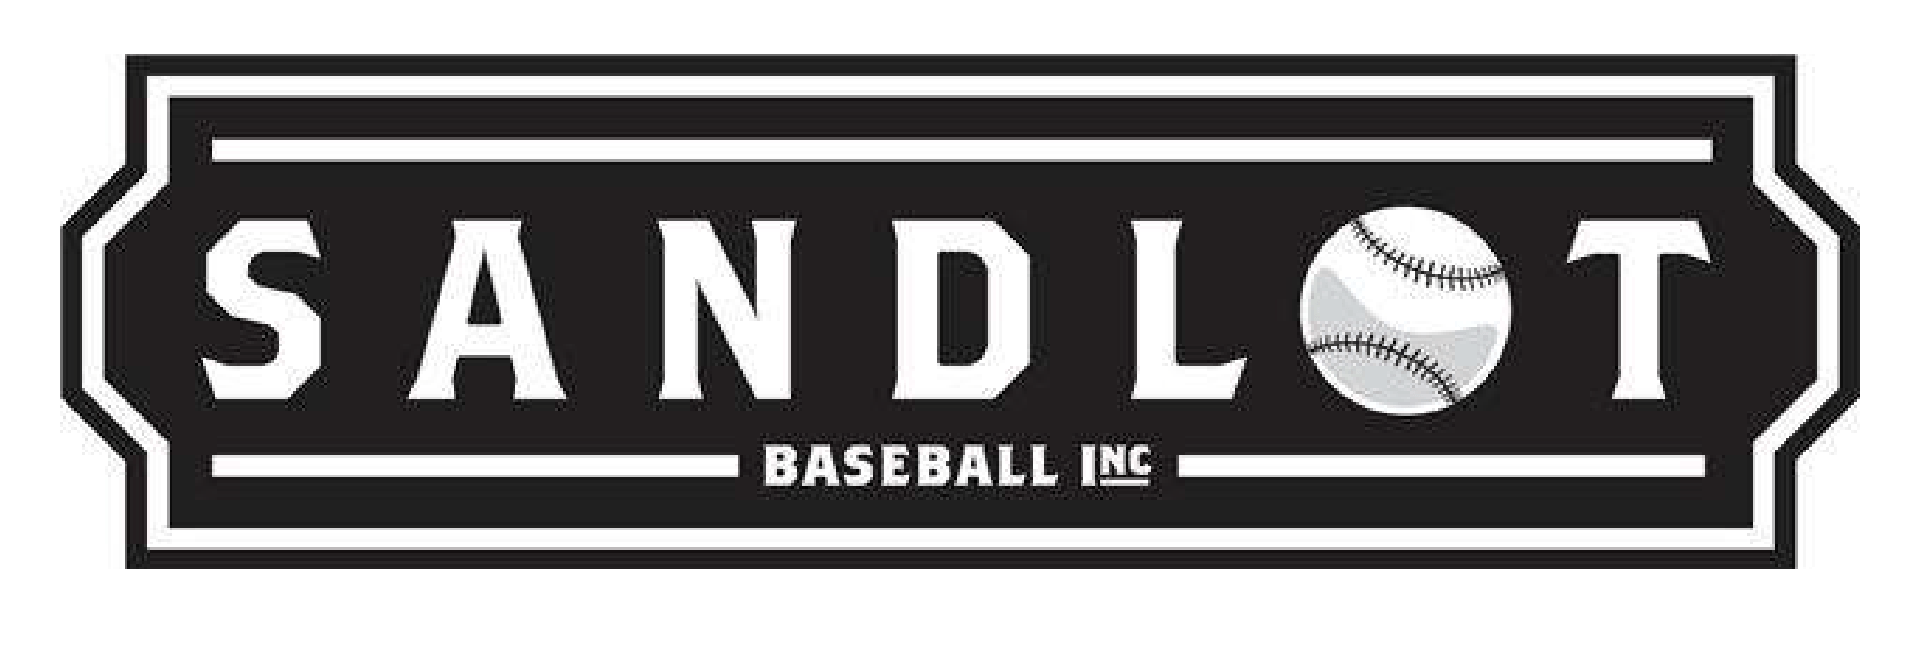 Sandlot Softball Logo - Sandlot Baseball, Inc